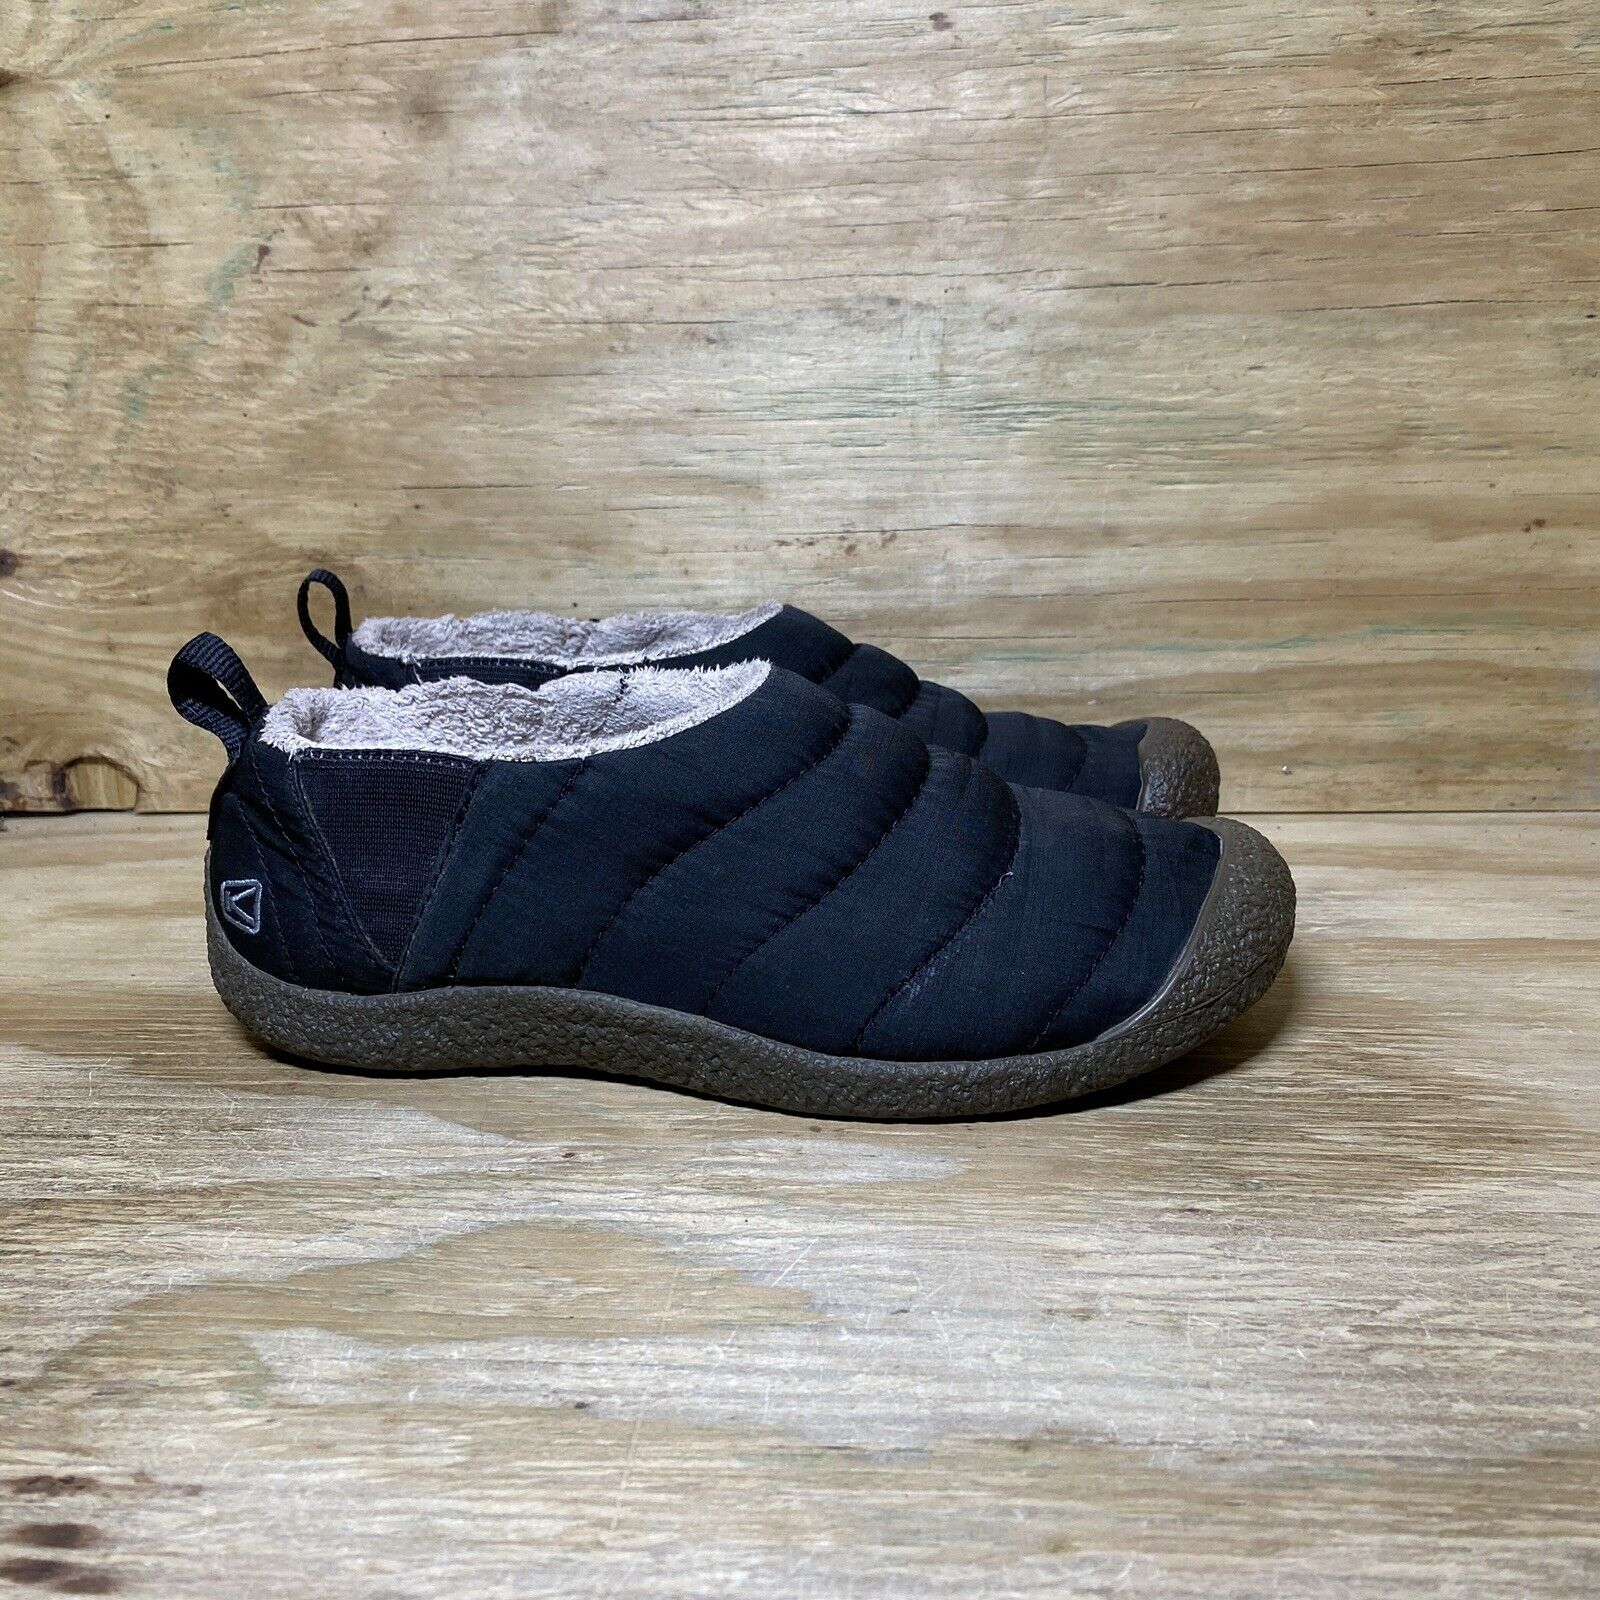 Keen Howser Slip On Shoes Men Size 8 Black Faux Fur Lined Clogs Slippers Comfort